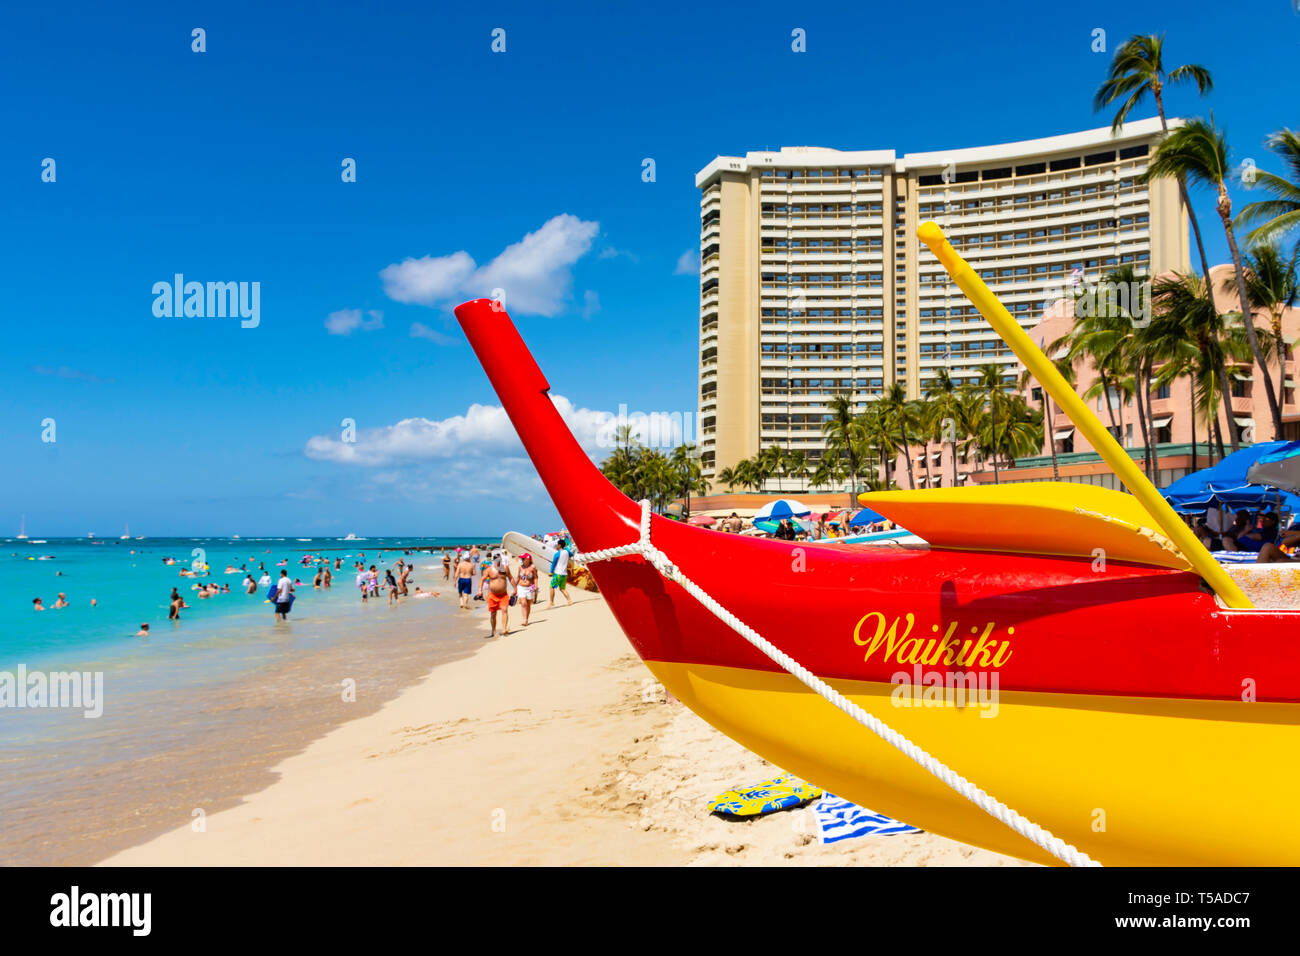 Outrigger Kanu am Strand von Waikiki Honolulu Hawaii USA an einem sonnigen Tag Stockfoto